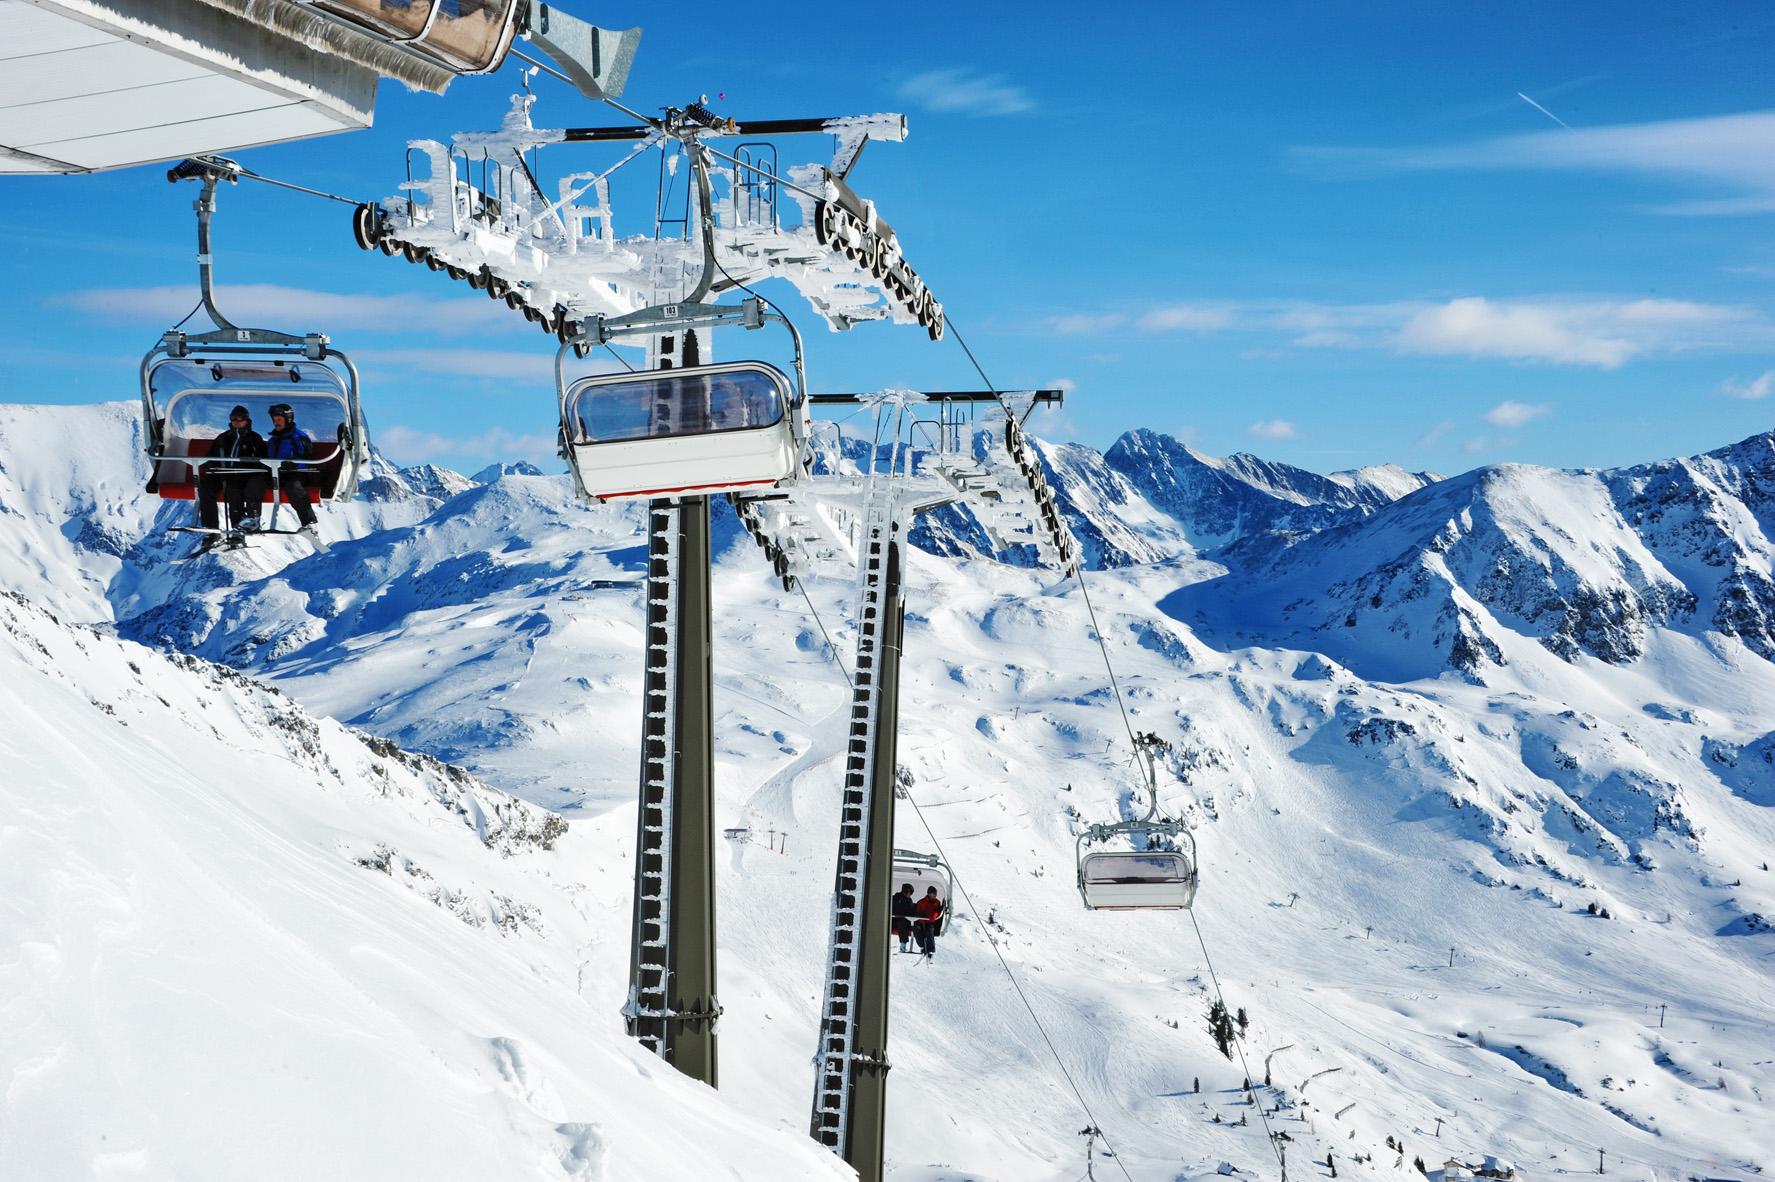 Obertauern ski area